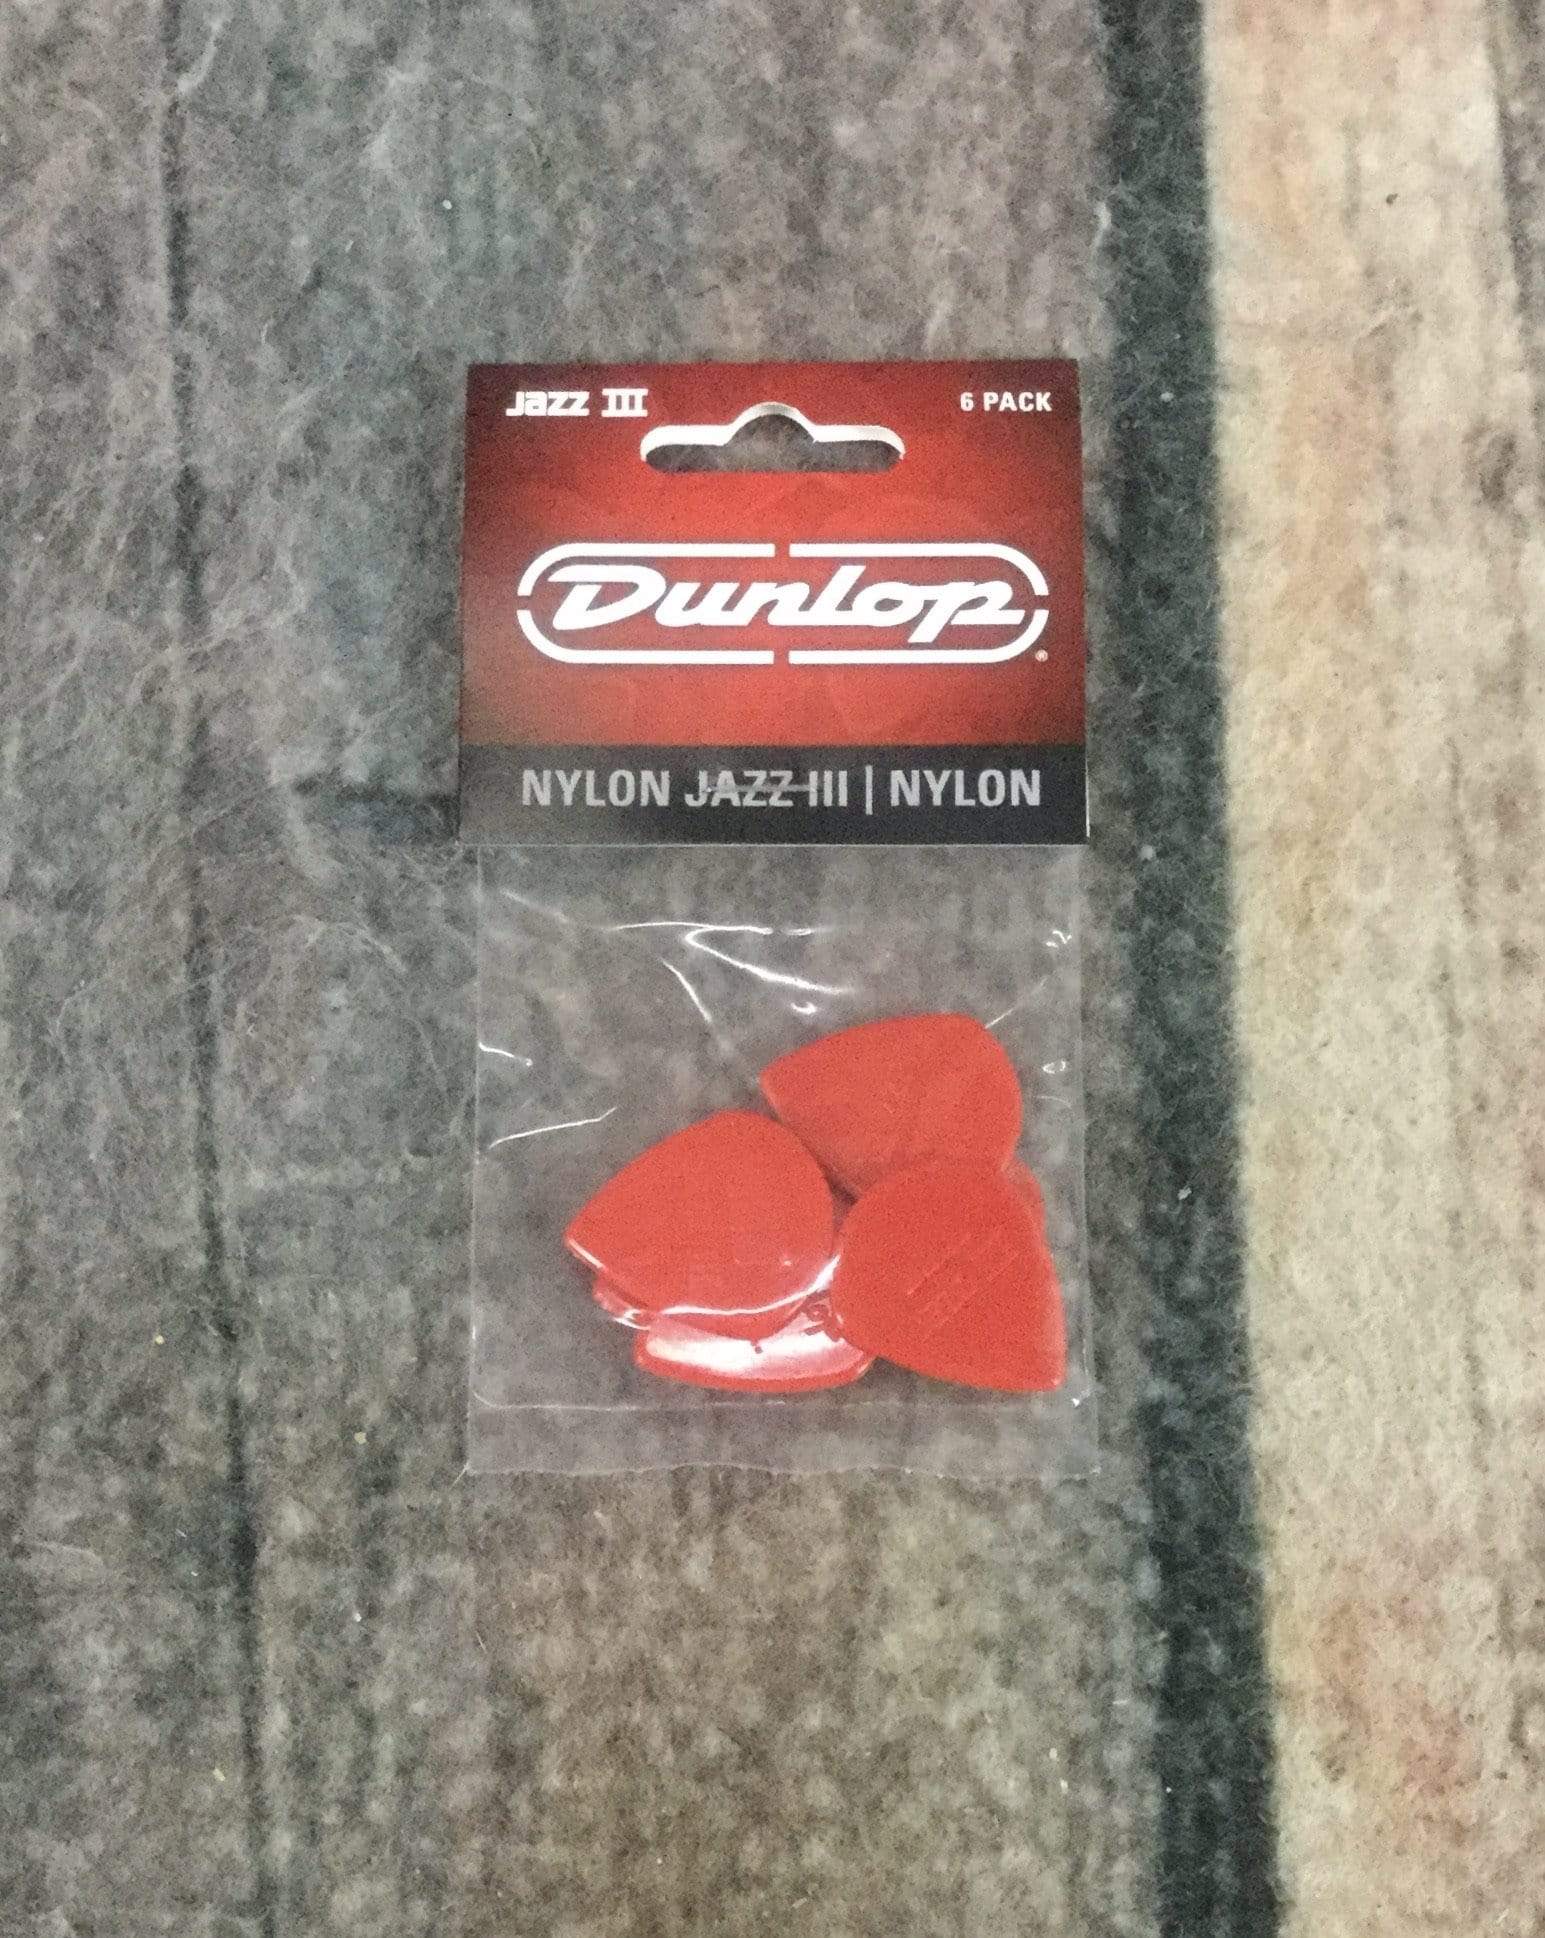 Dunlop Pick Dunlop Nylon Jazz III Nylon 47P3N Pick Pack